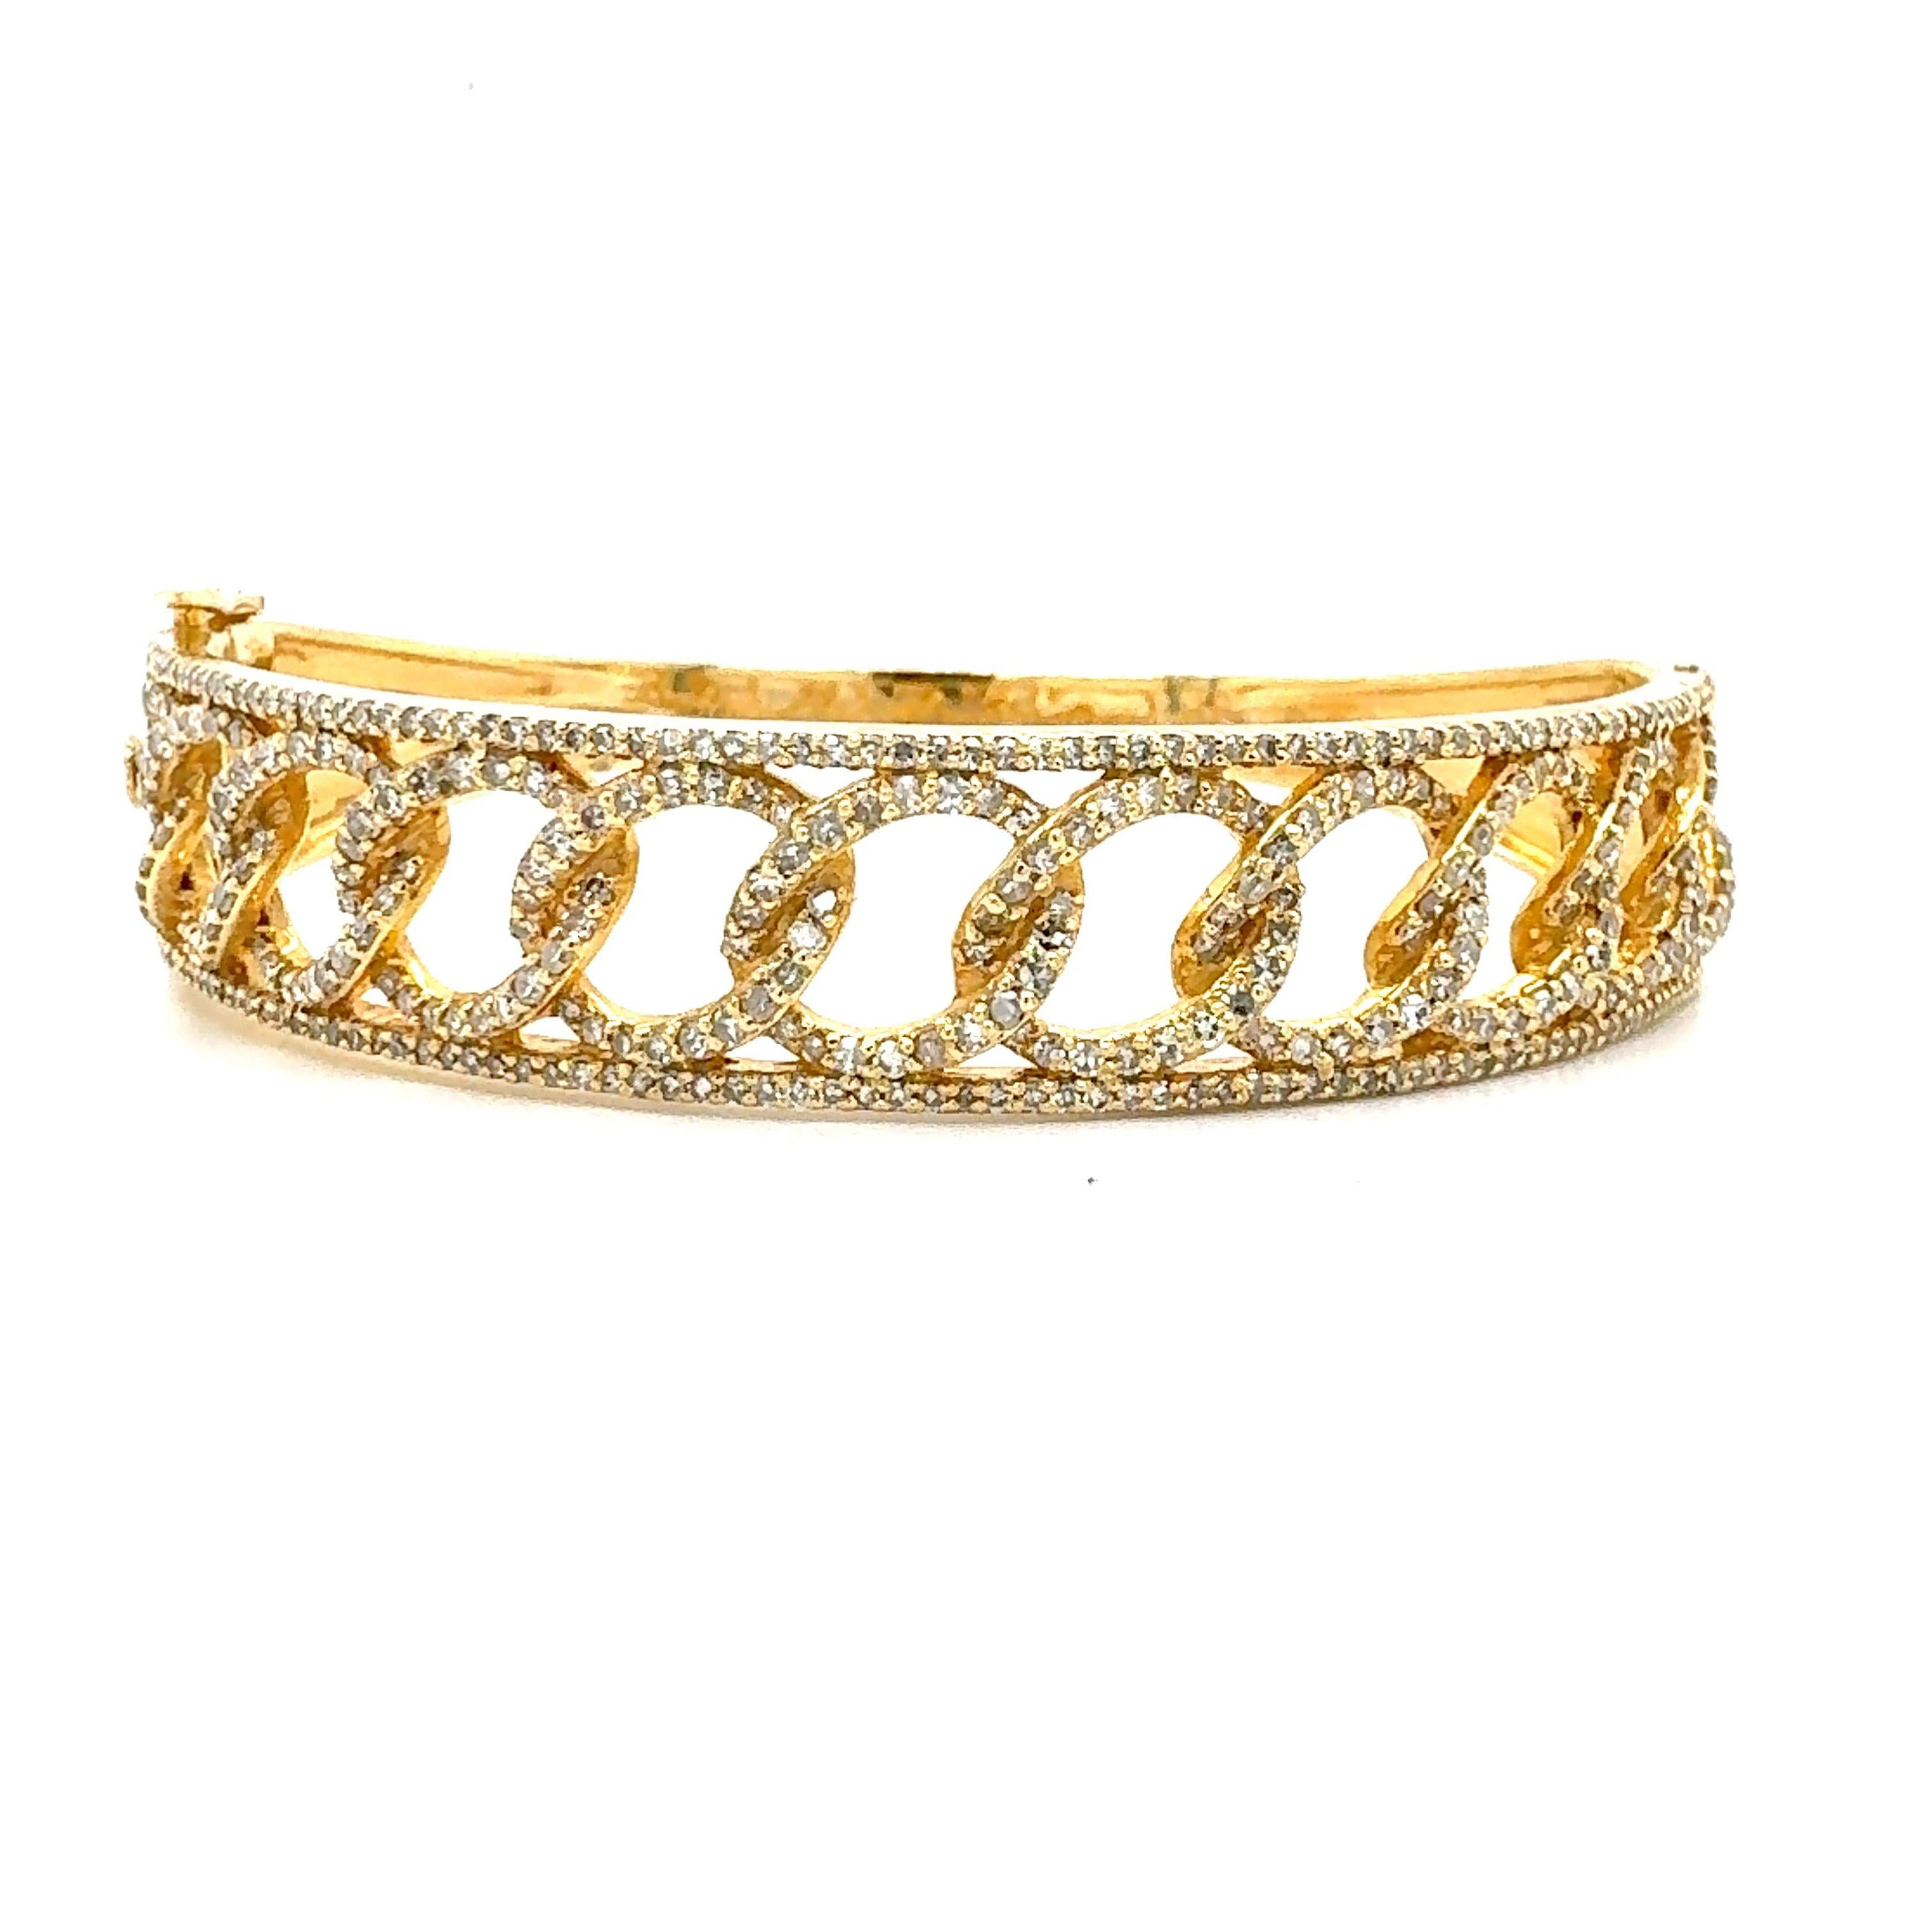 A natural 2.18-carat natural diamond solid bangle bracelet set in 14-Kt yellow gold. 